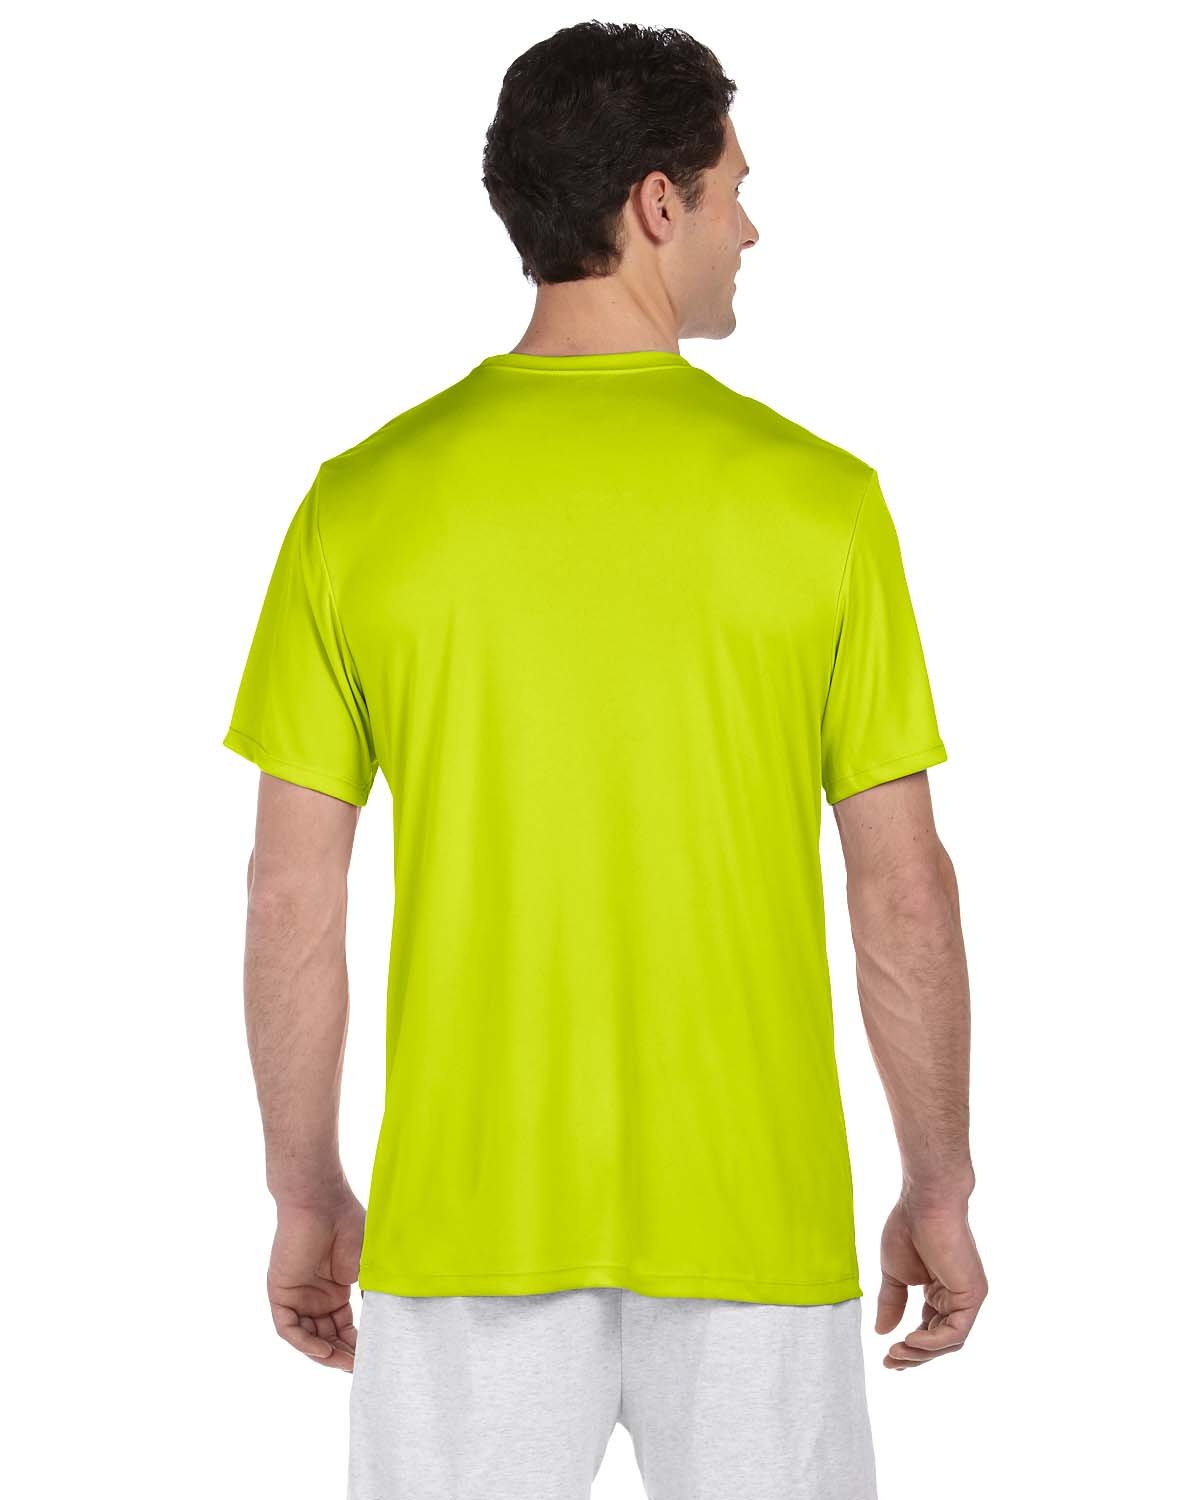 Hanes 4 oz. Cool Dri T-Shirt, Large, SAFETY GREEN